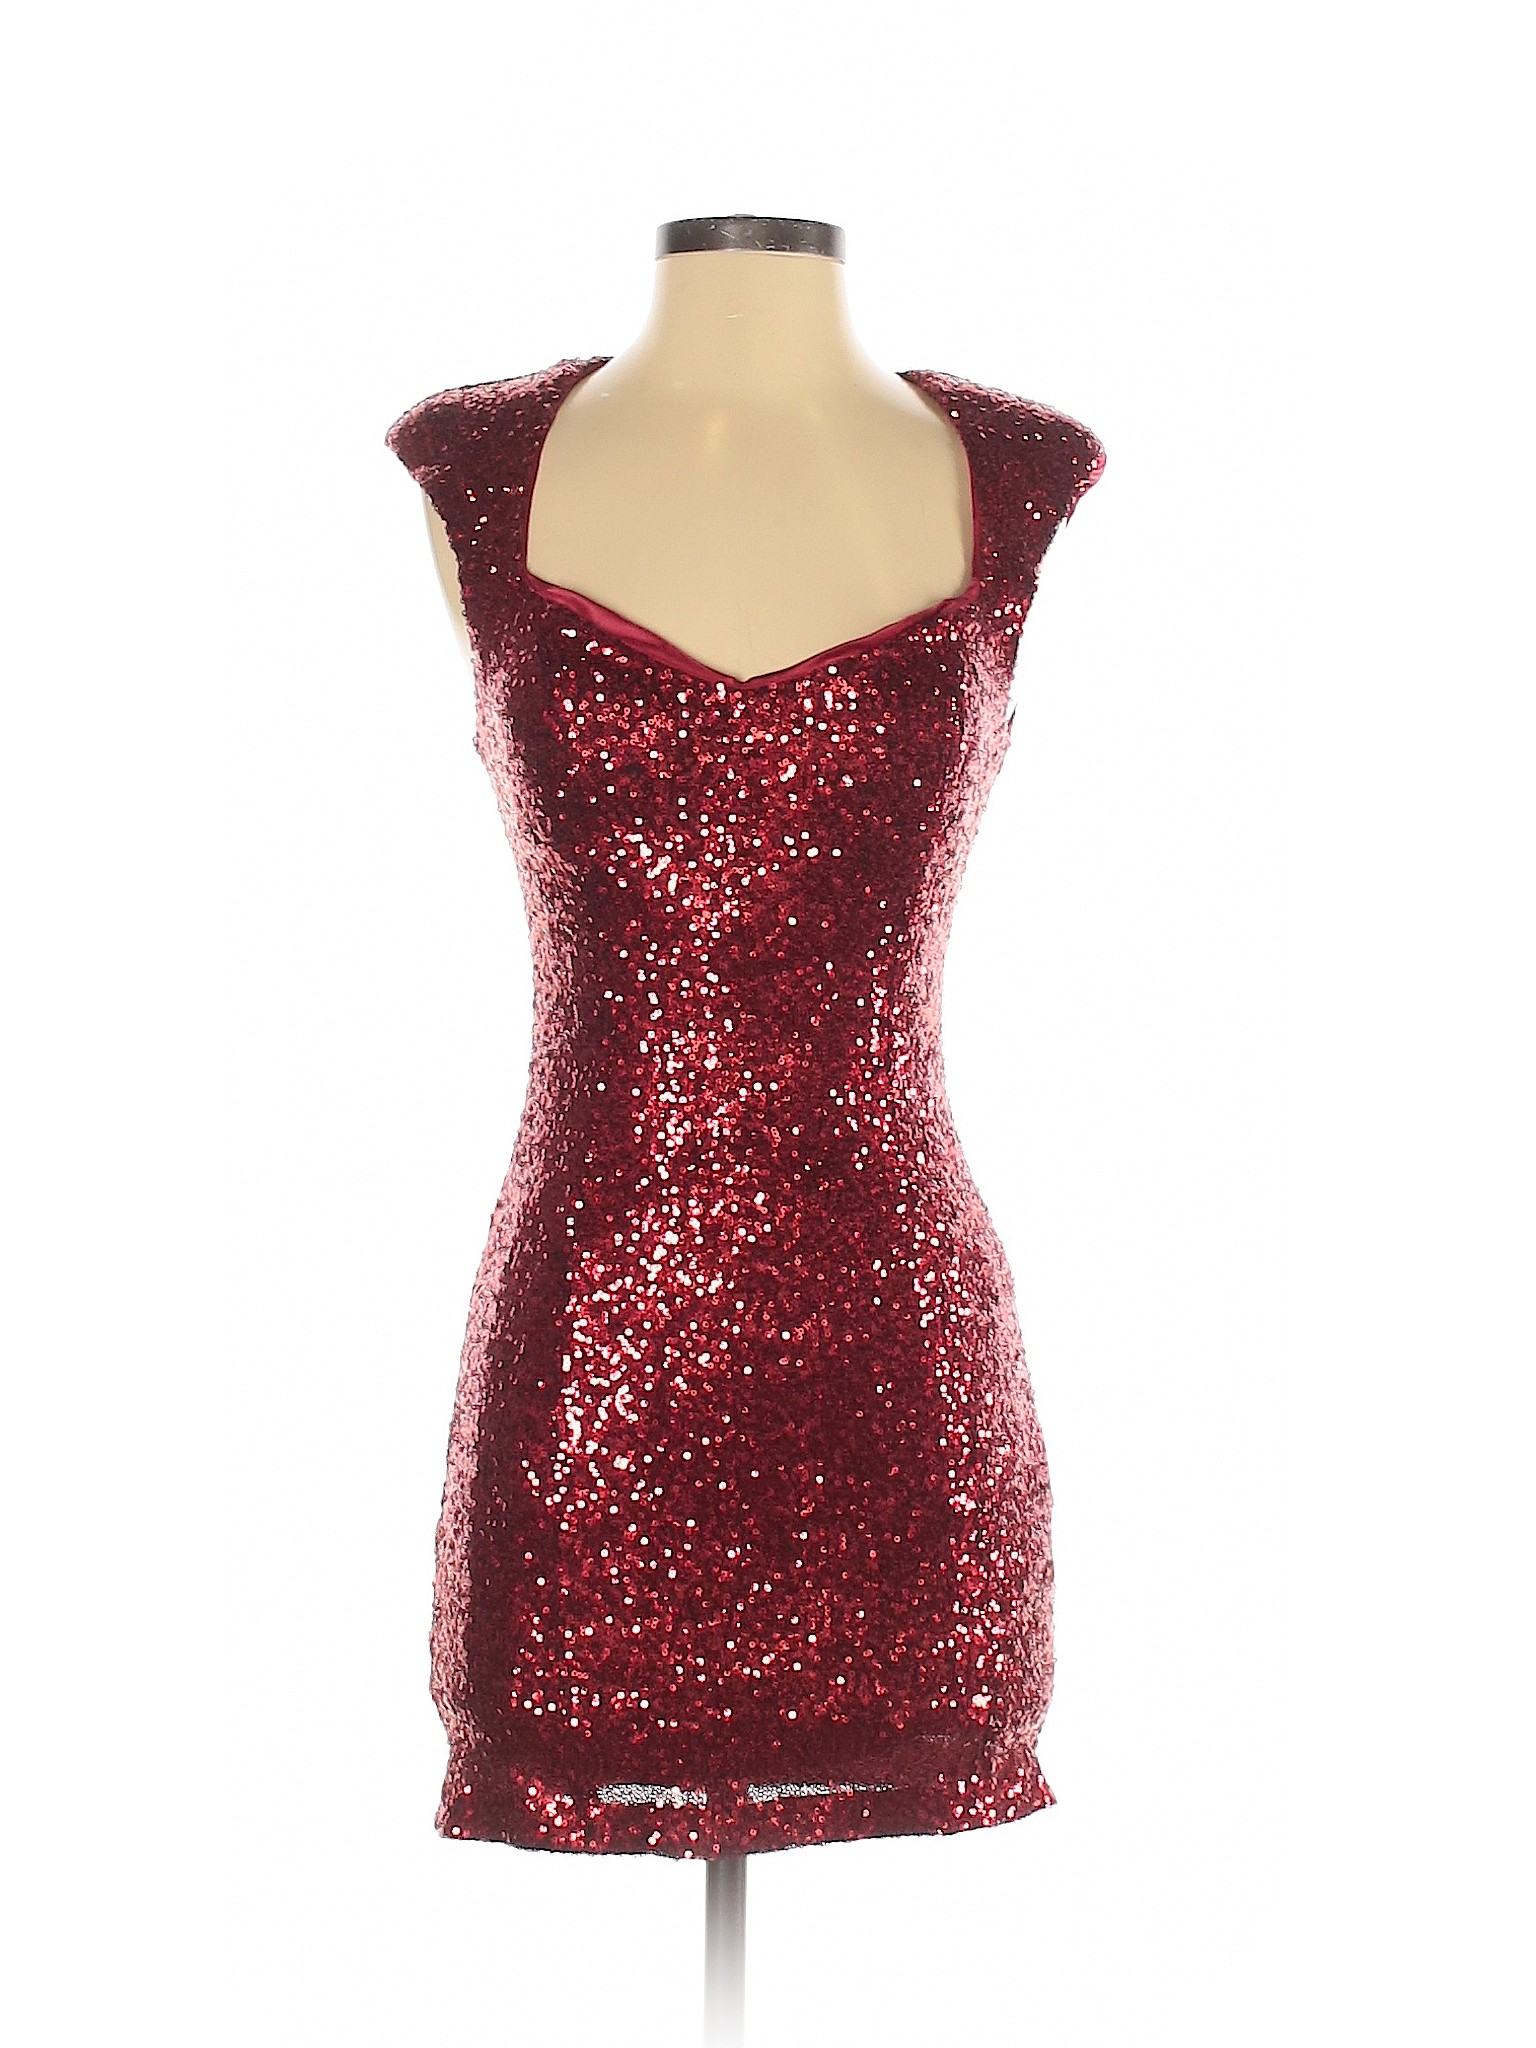 Guess Women Red Cocktail Dress 4 | eBay